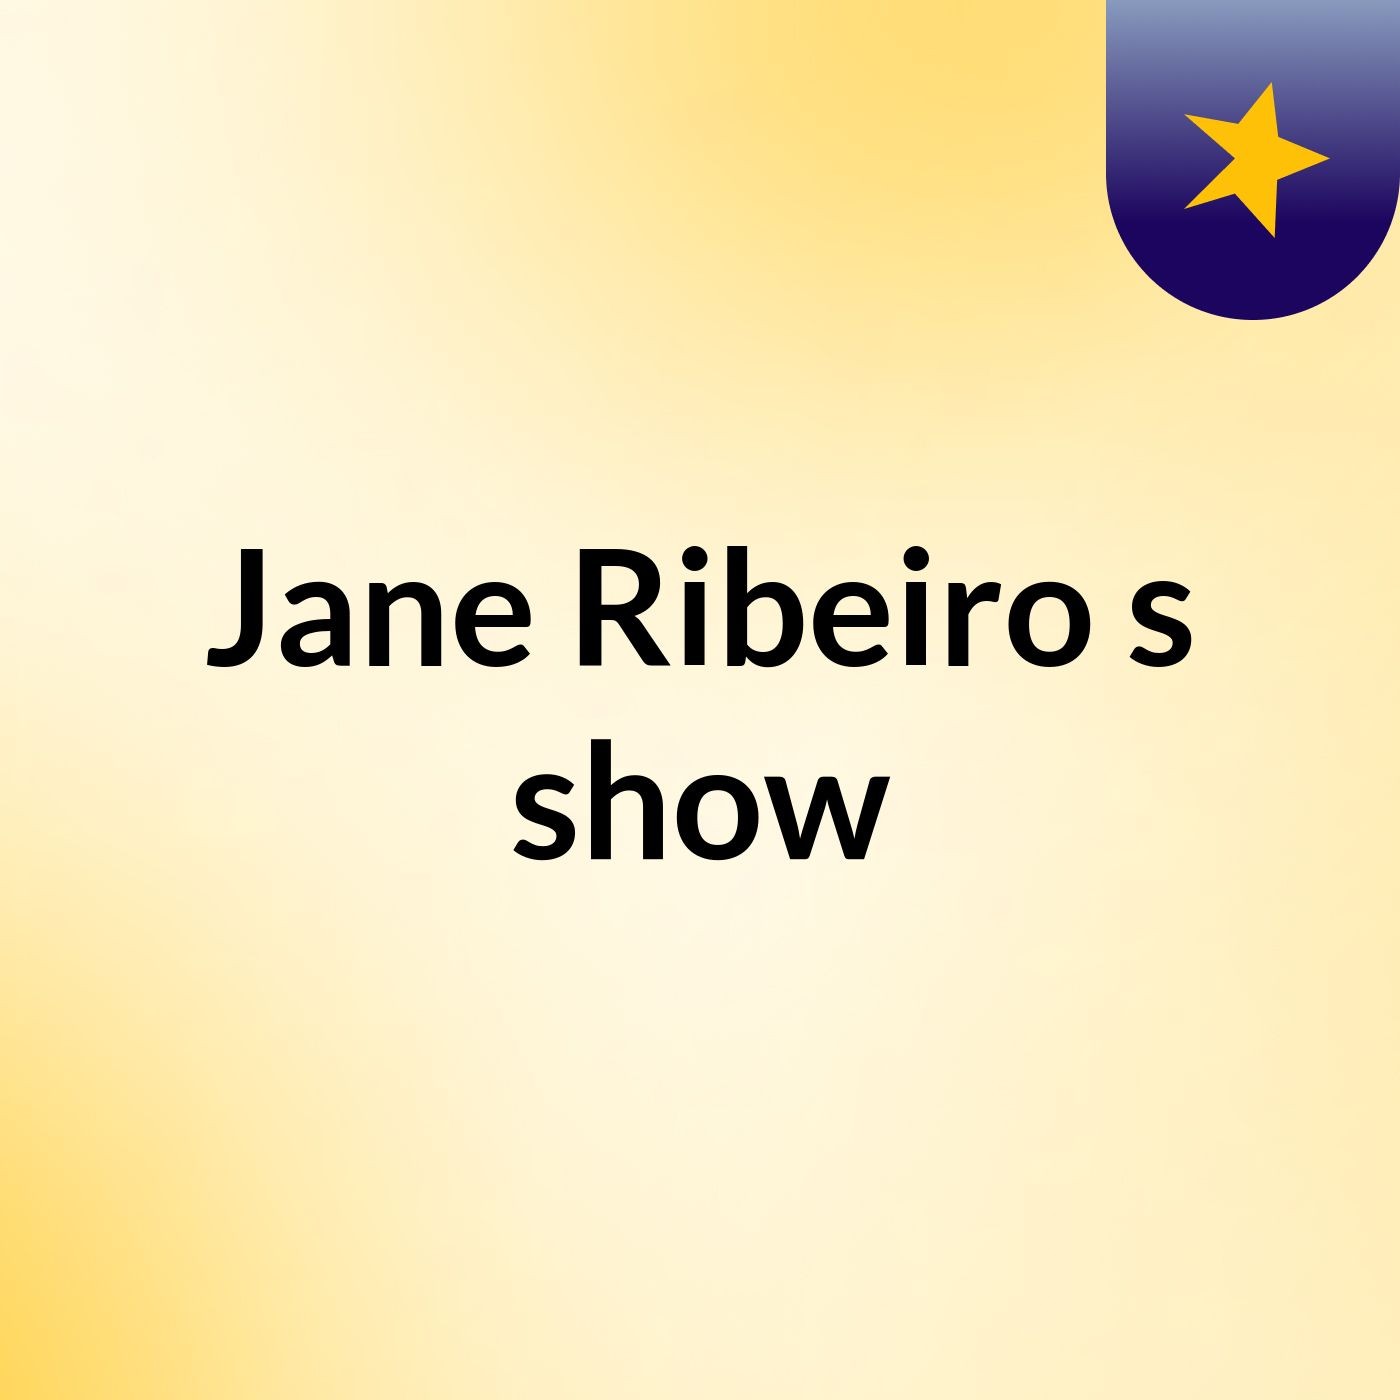 Jane Ribeiro's show